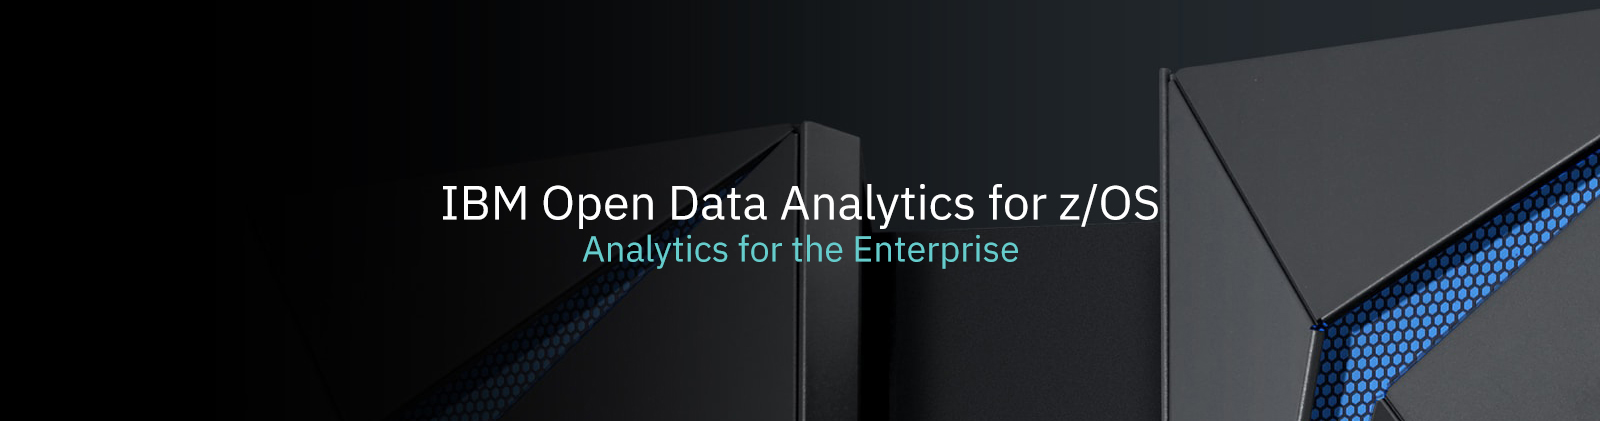 IBM Open Data Analytics